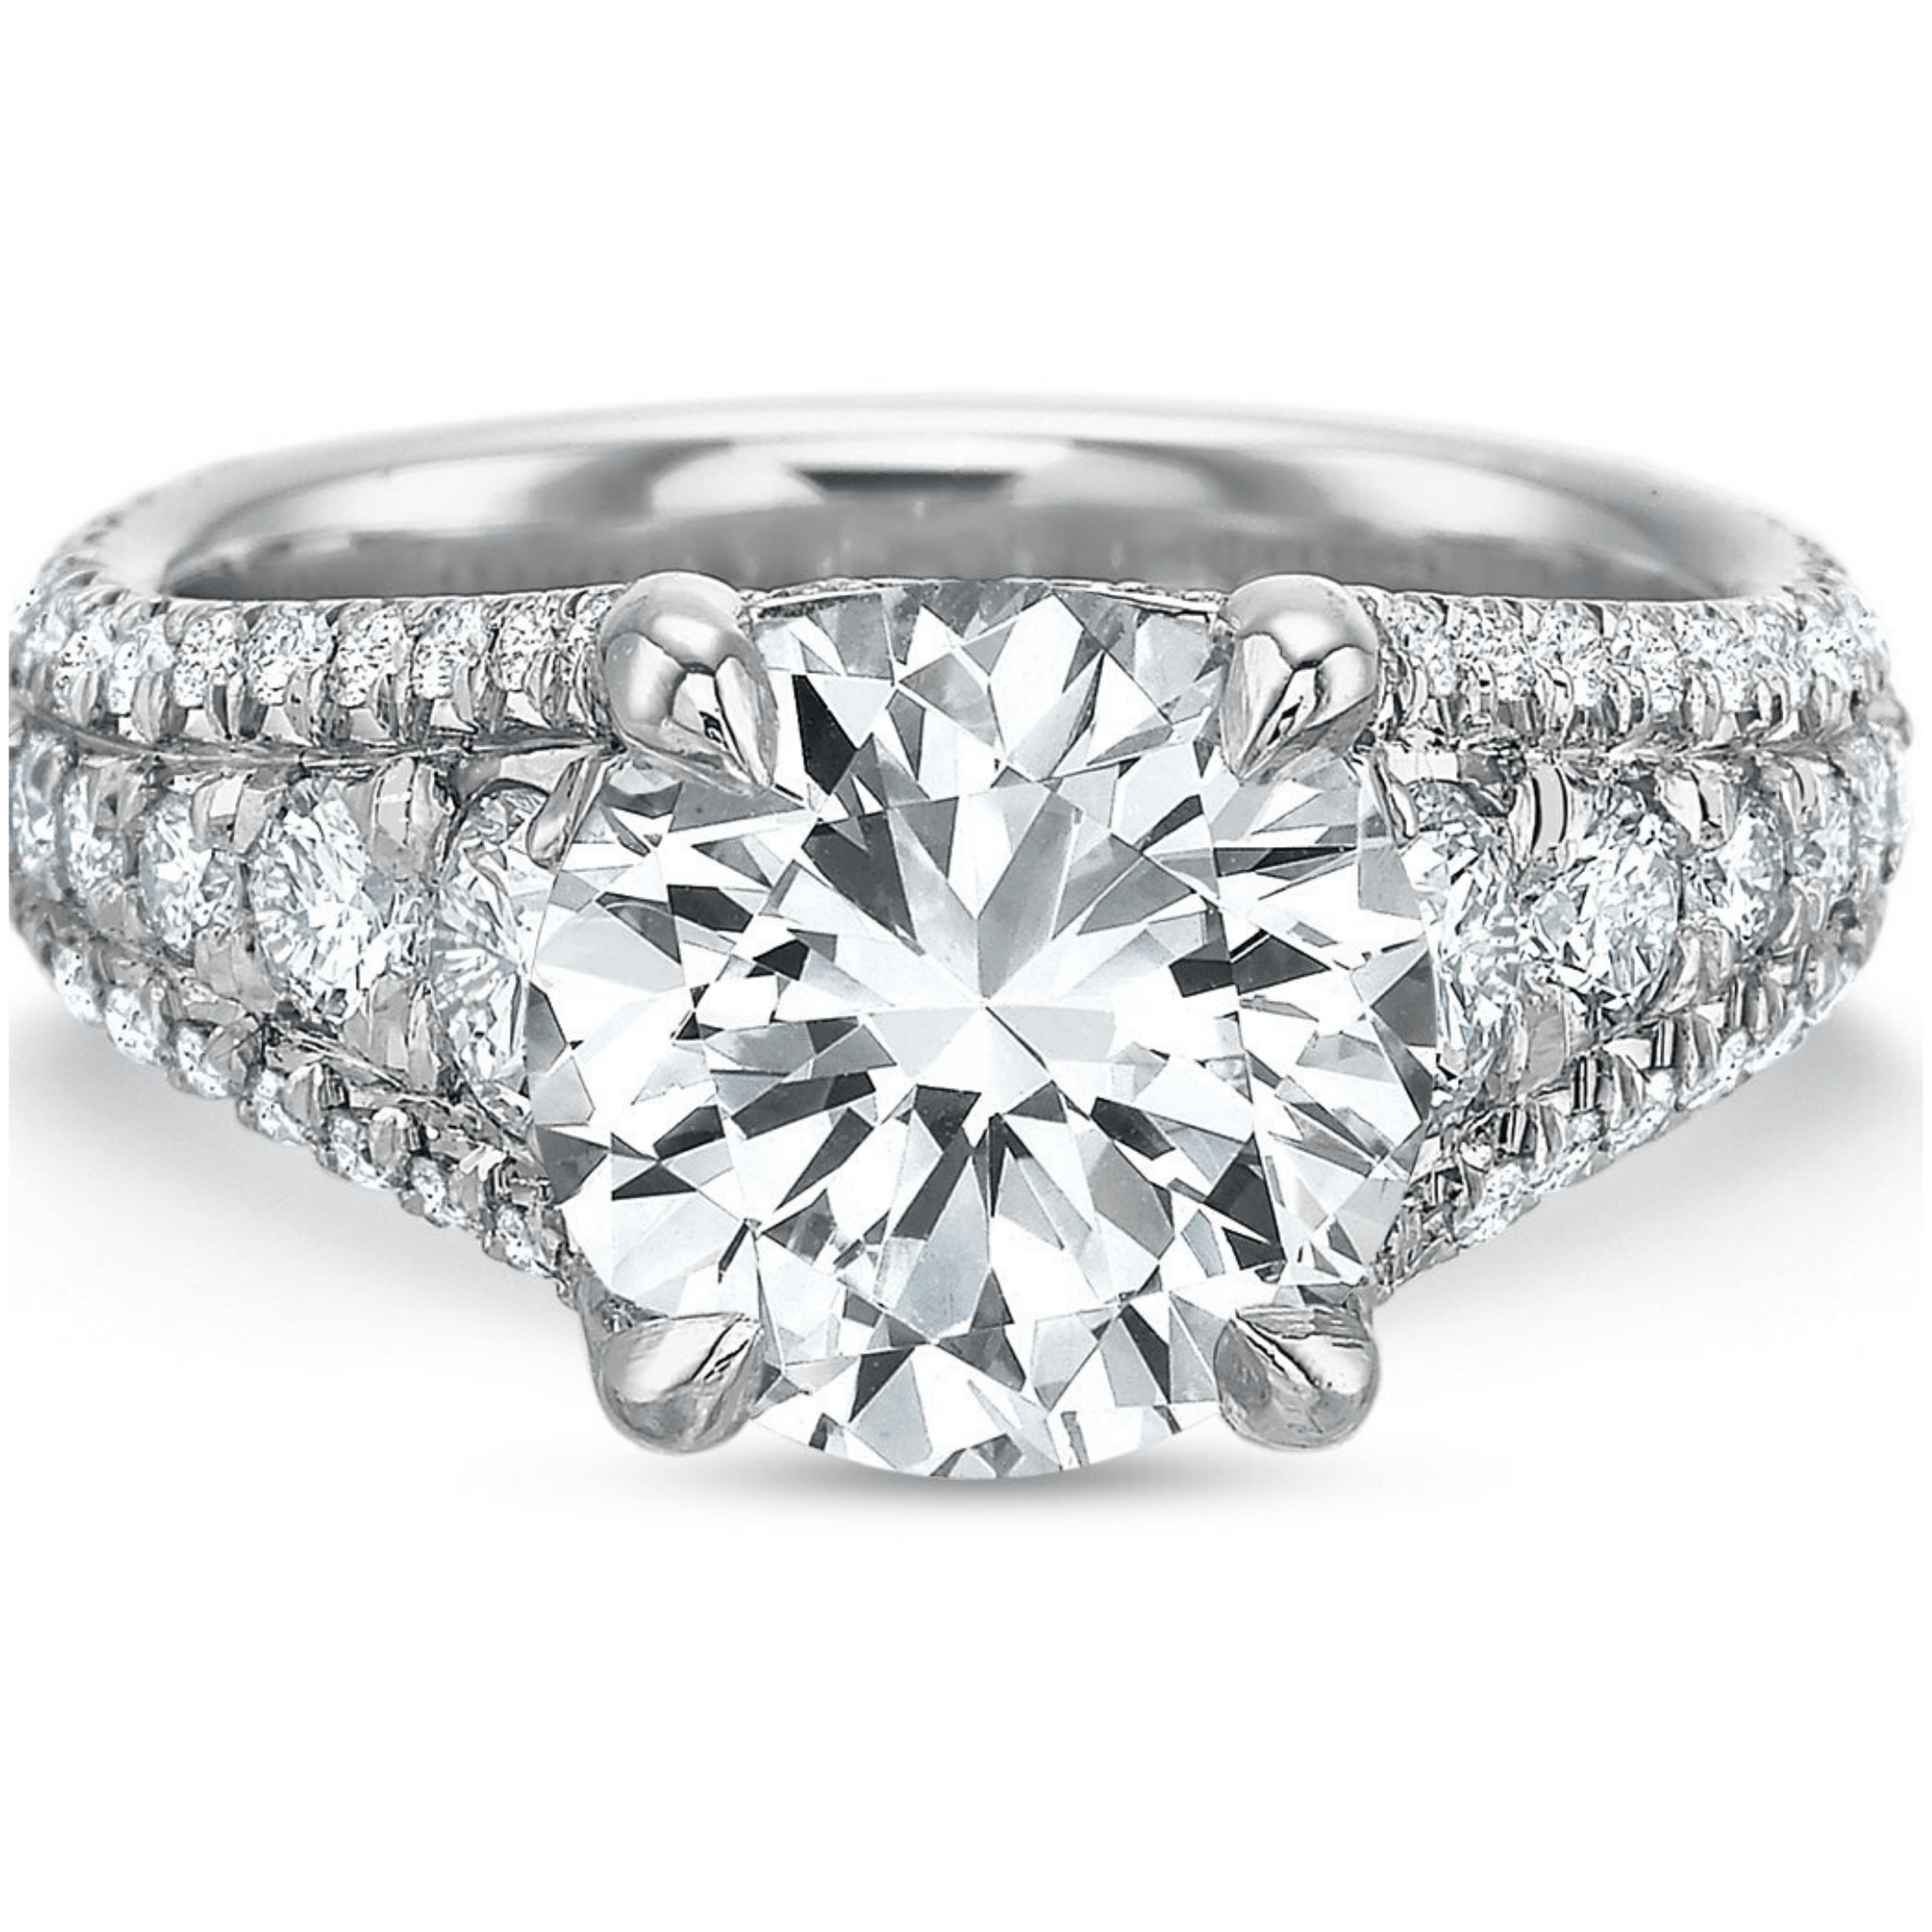 Platinum Extraordinary Graduated Bead Shank Engagement Ring Setting